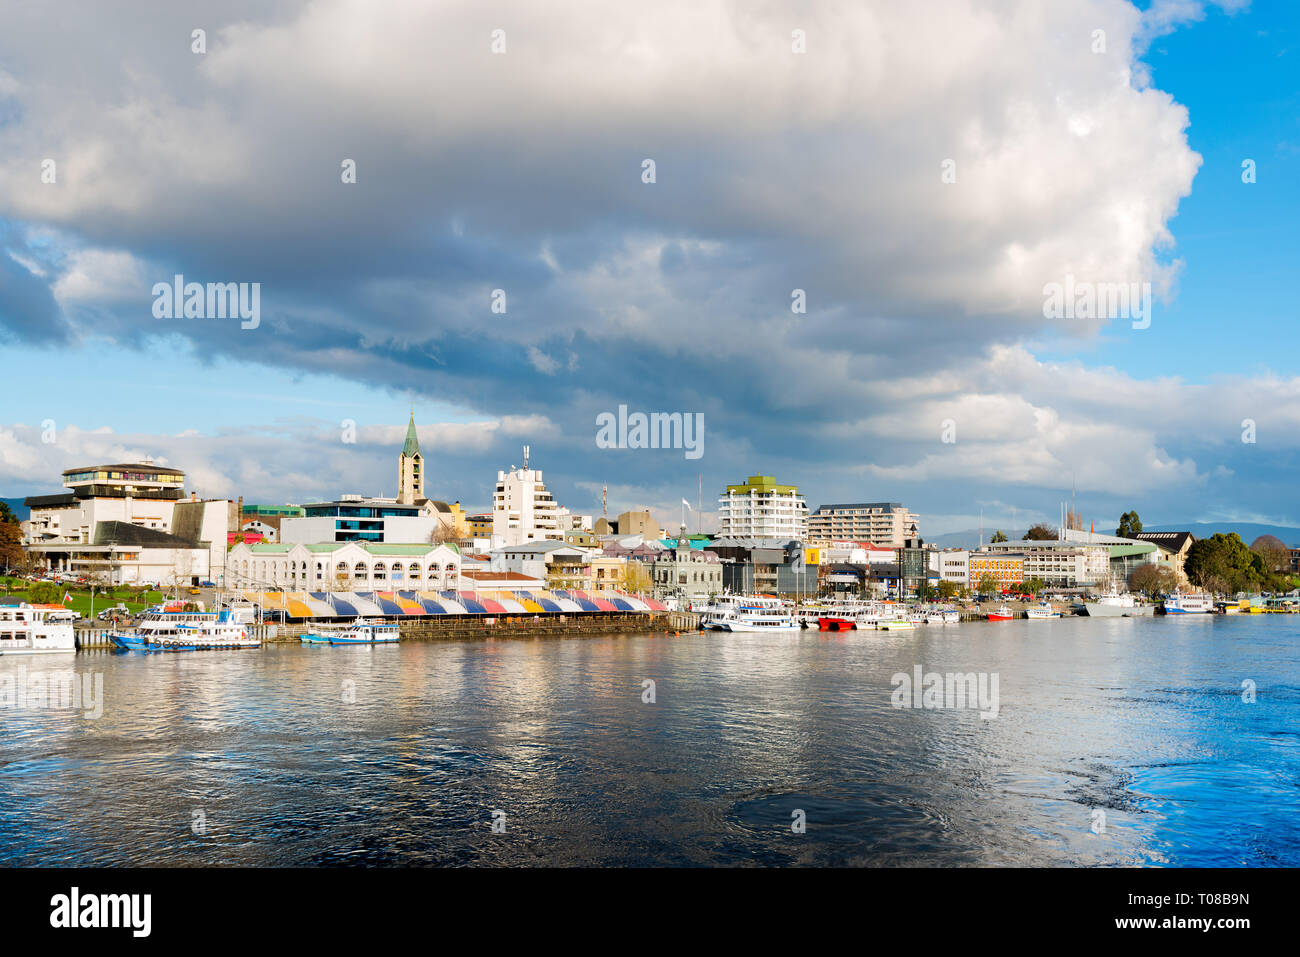 The city of Valdivia at the shore of Calle-Calle river, Region de Los Rios, Chile Stock Photo